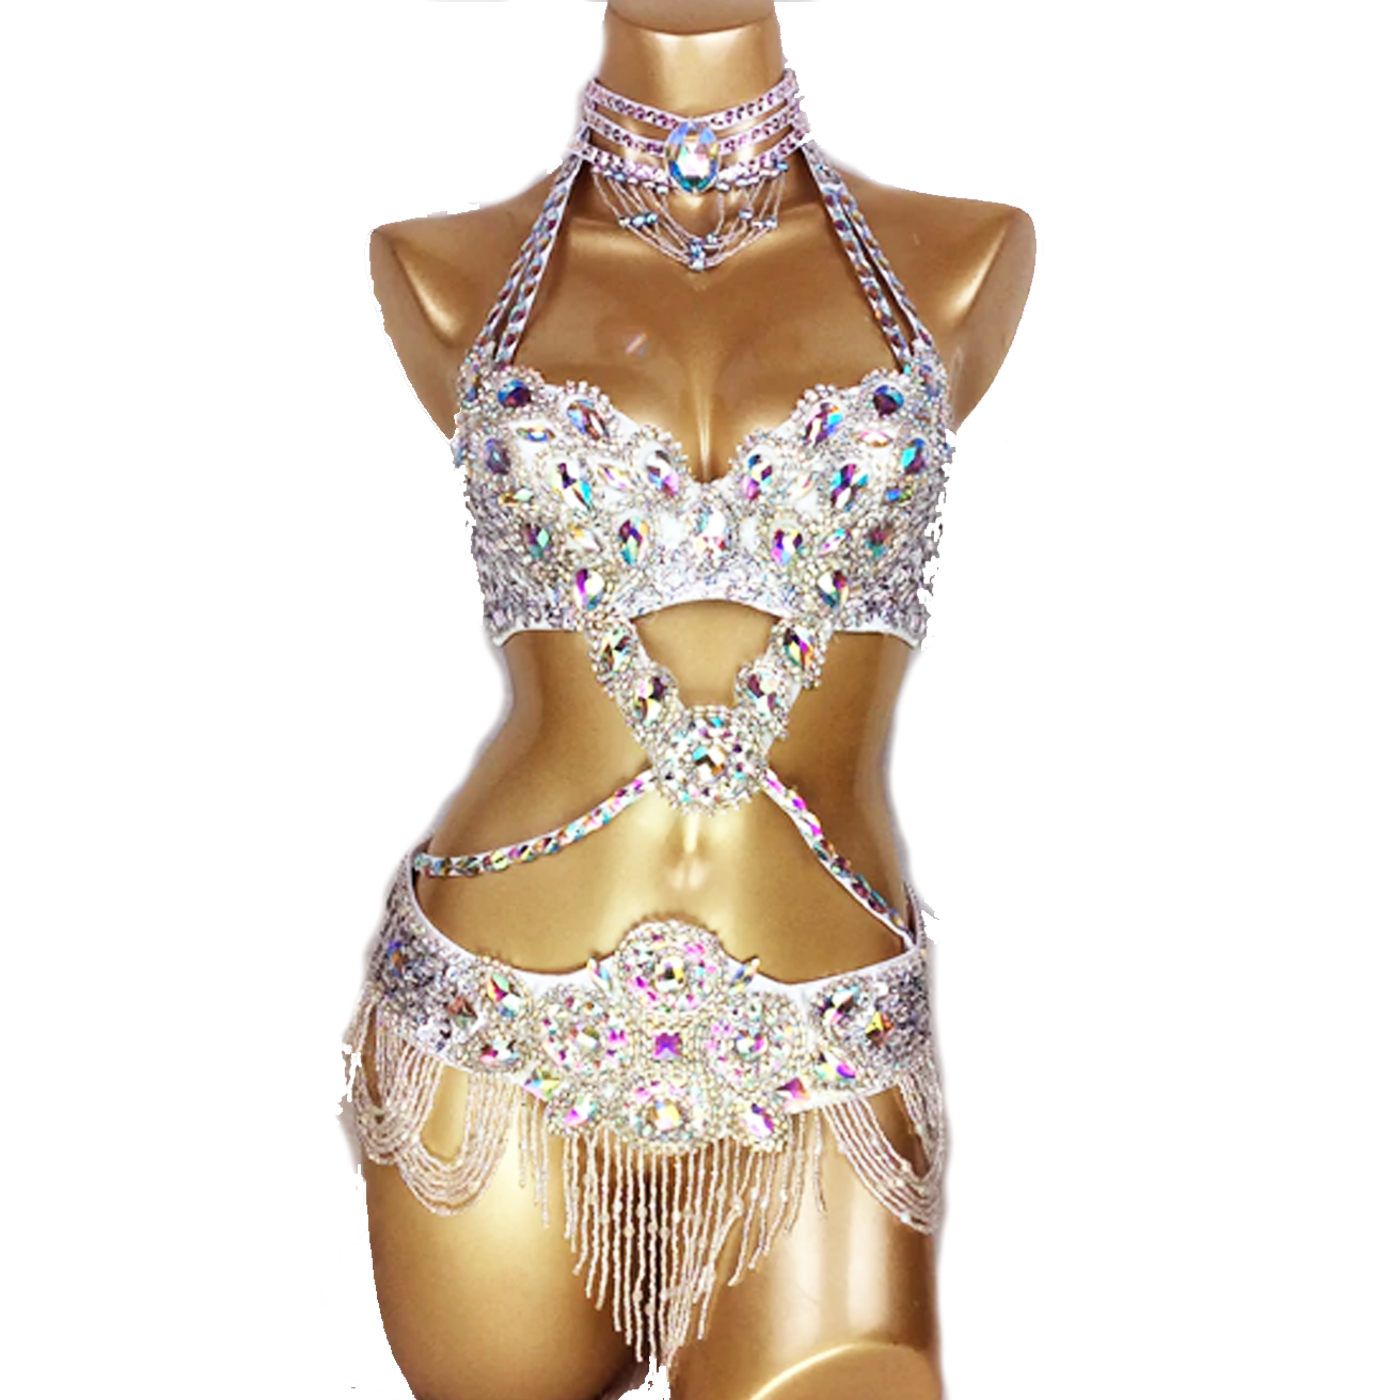 wholesale belly dance costume 3pcs/set(BRA+BELT+NECKLACE) GOLD&SILVER white  4 COLORS #TF201,34D/DD,36D/DD,38/D/DD,40B/C/D,42D/DD - Price history &  Review, AliExpress Seller - belly dance Eshop